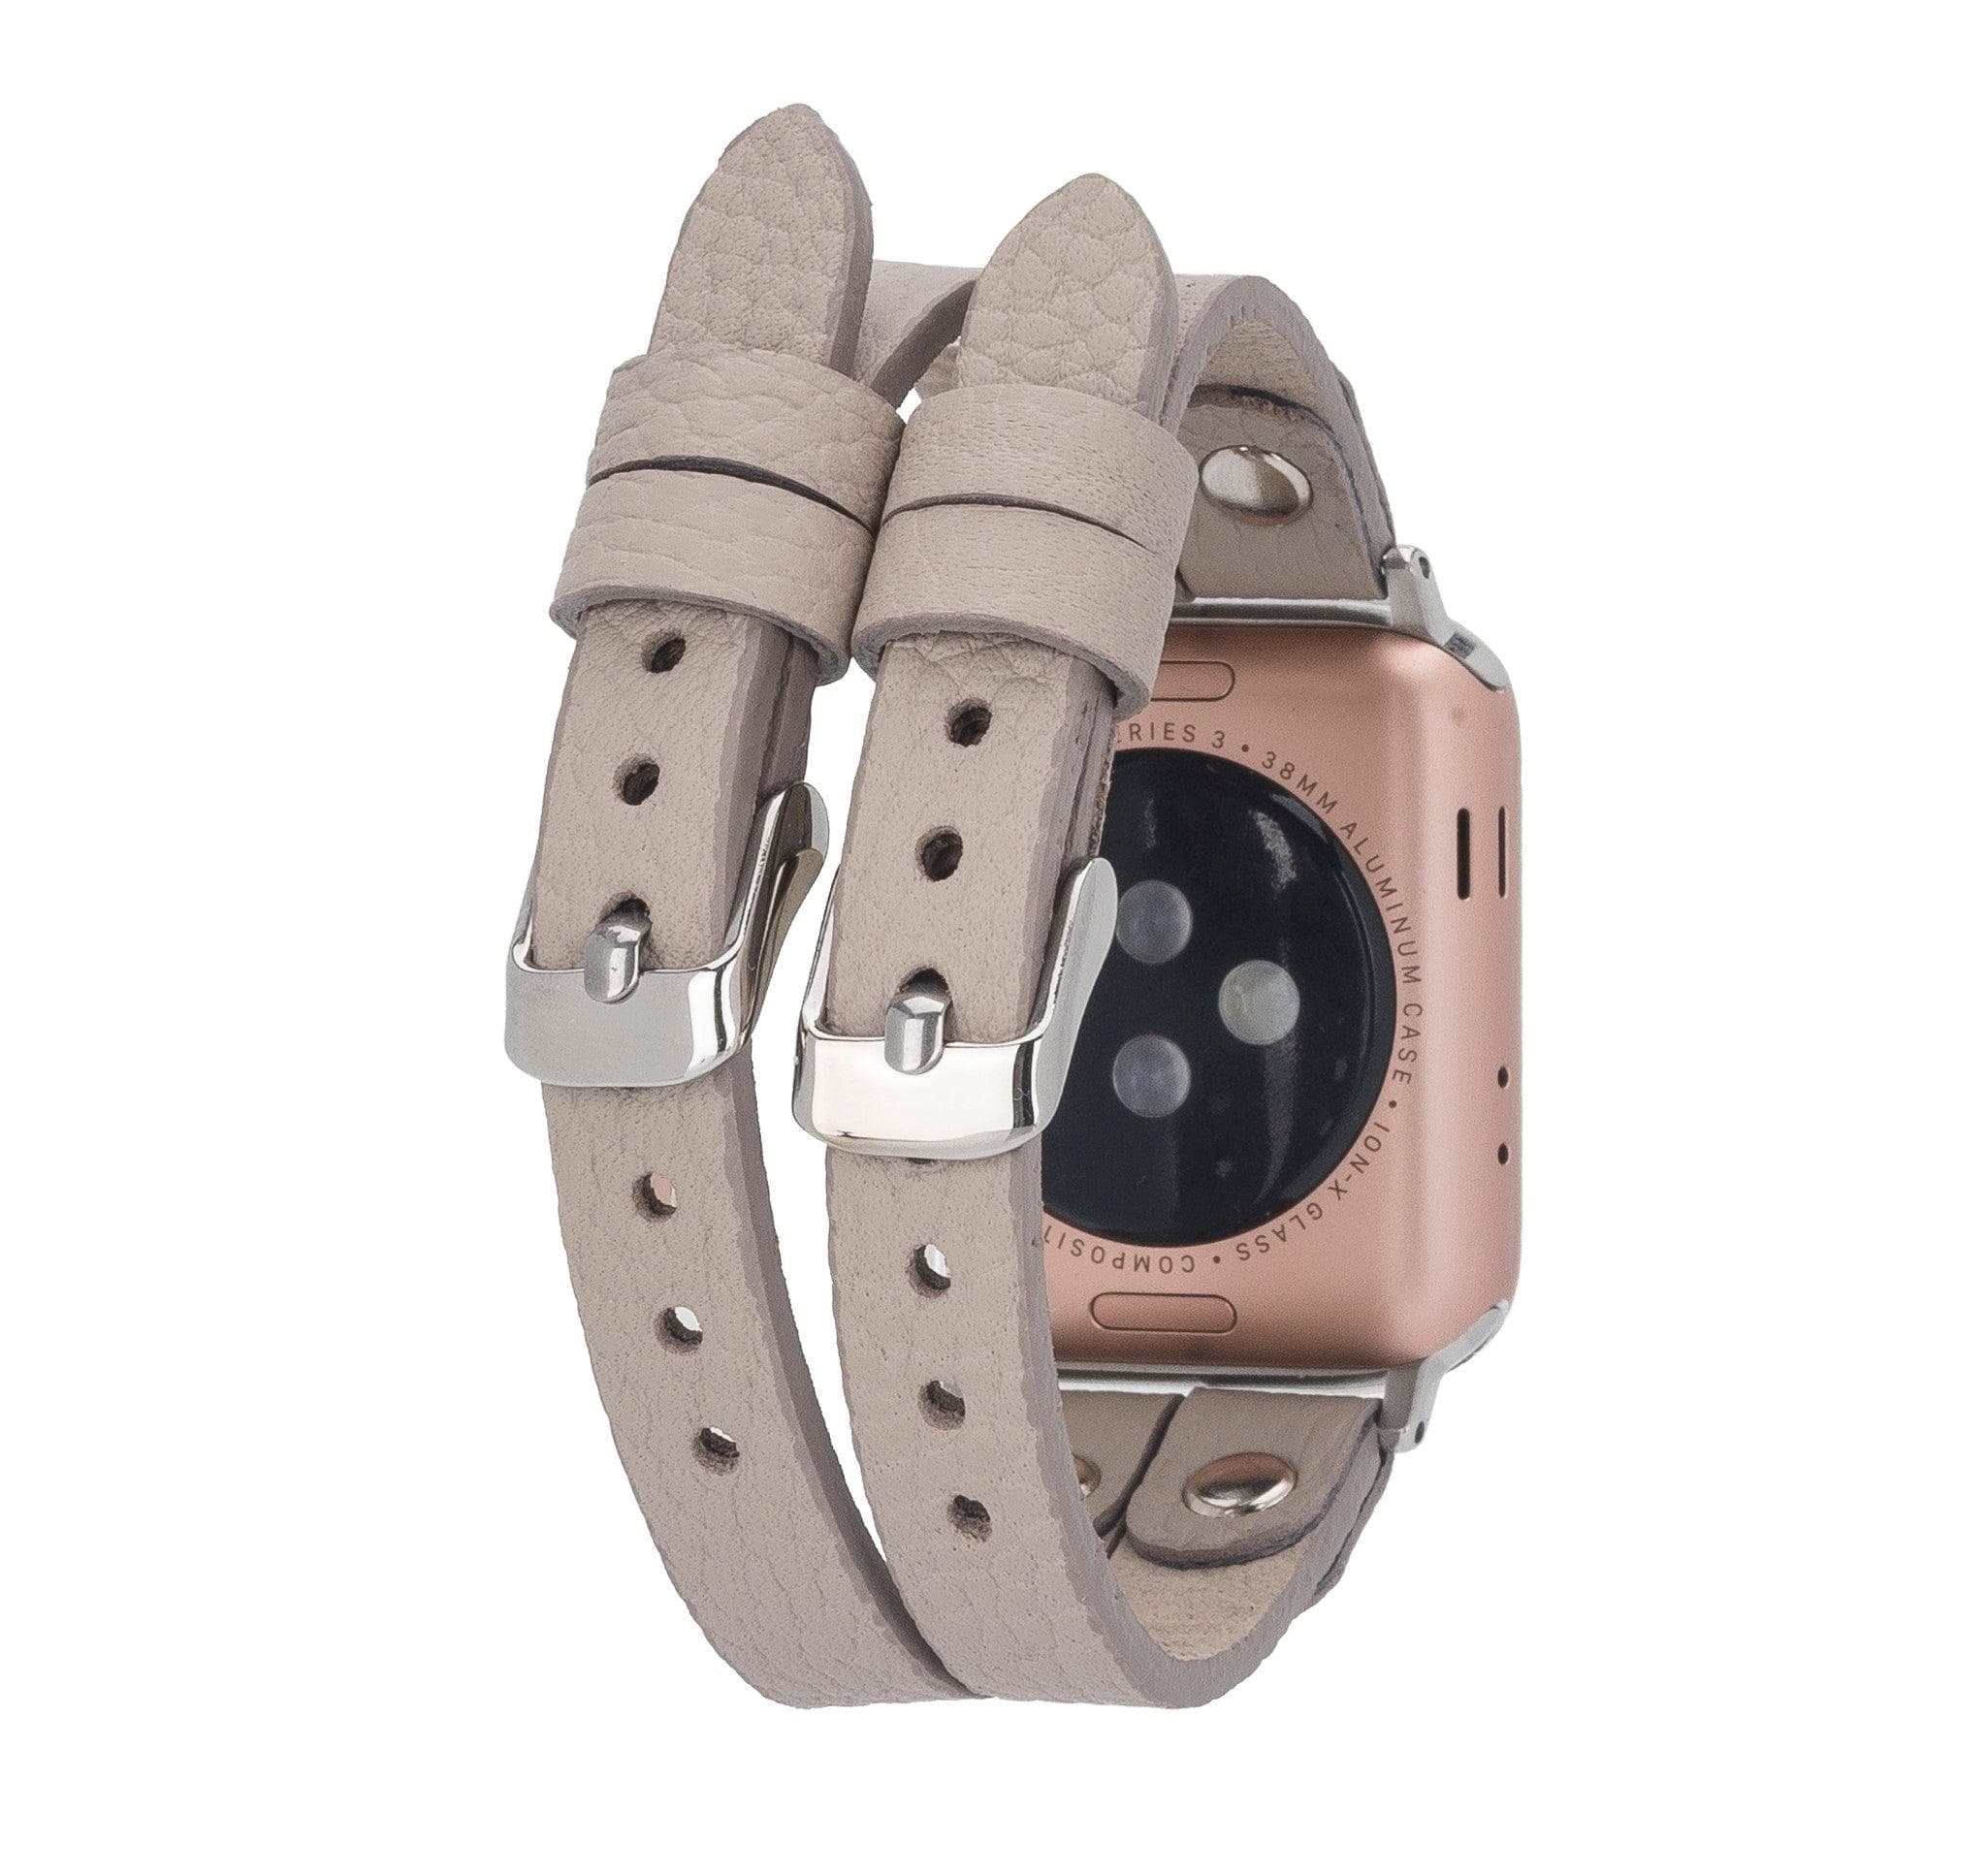 Durham Ely Apple Watch Leather Straps Bomonti